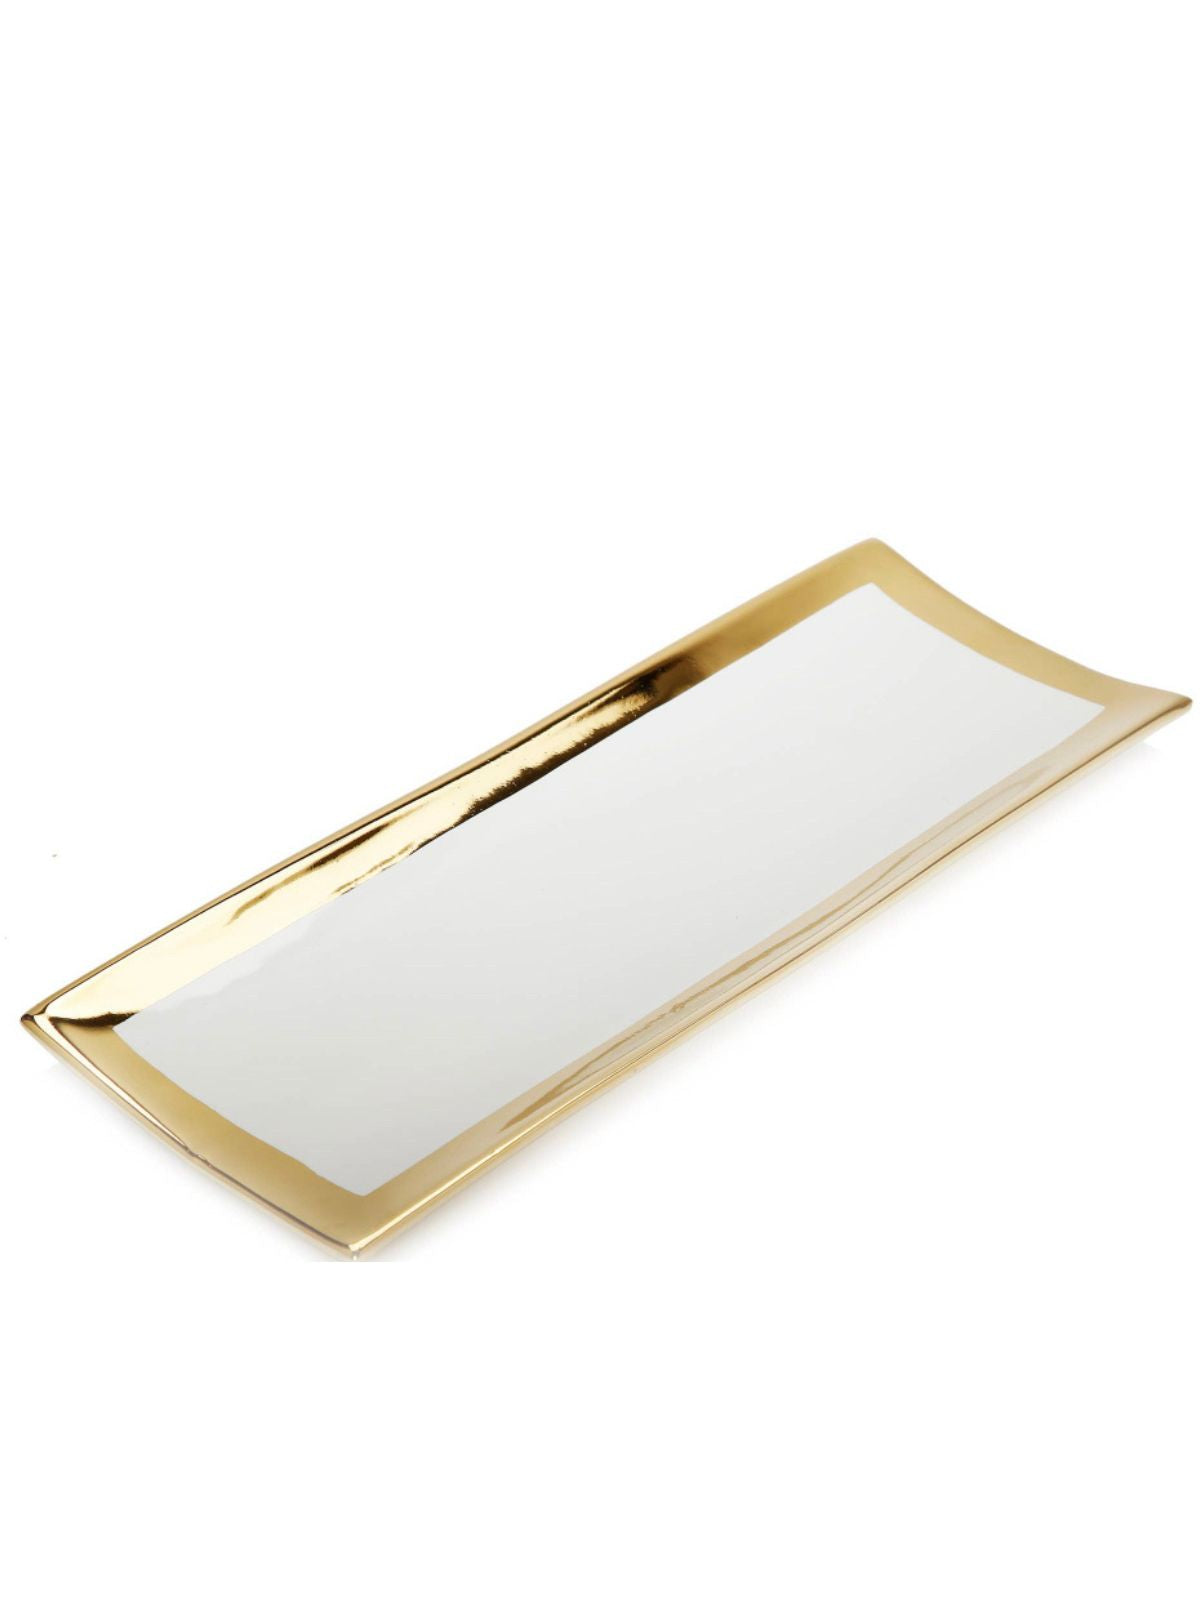 White Rectangular Decorative Tray With Luxury Gold Edges, 14.5L x 5.5W.